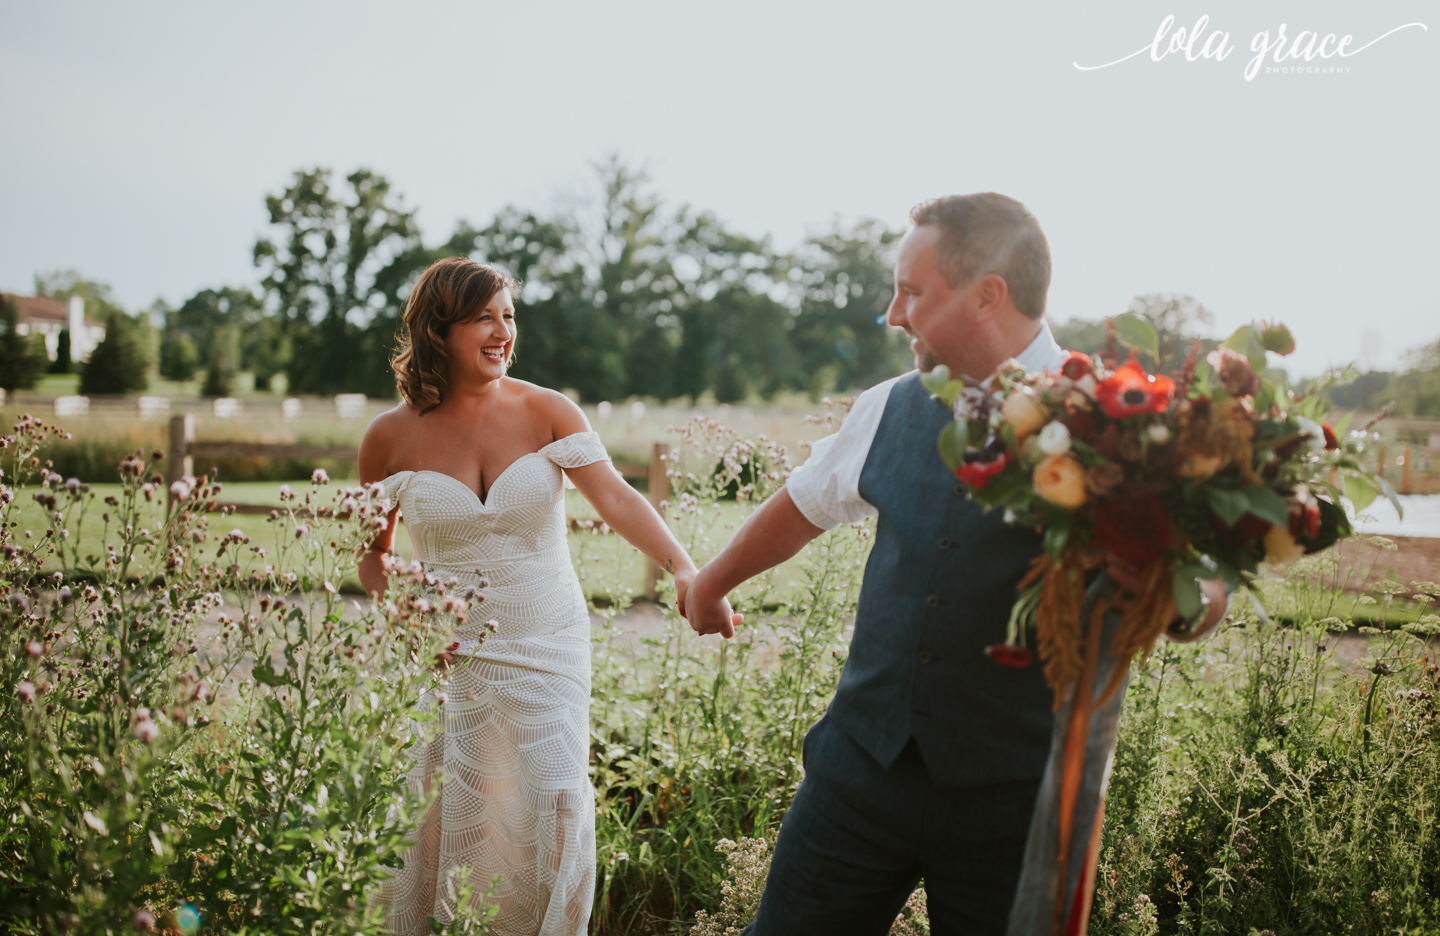 lola-grace-photography-michigan-fouth-of-july-wedding-conman-farms-62.jpg